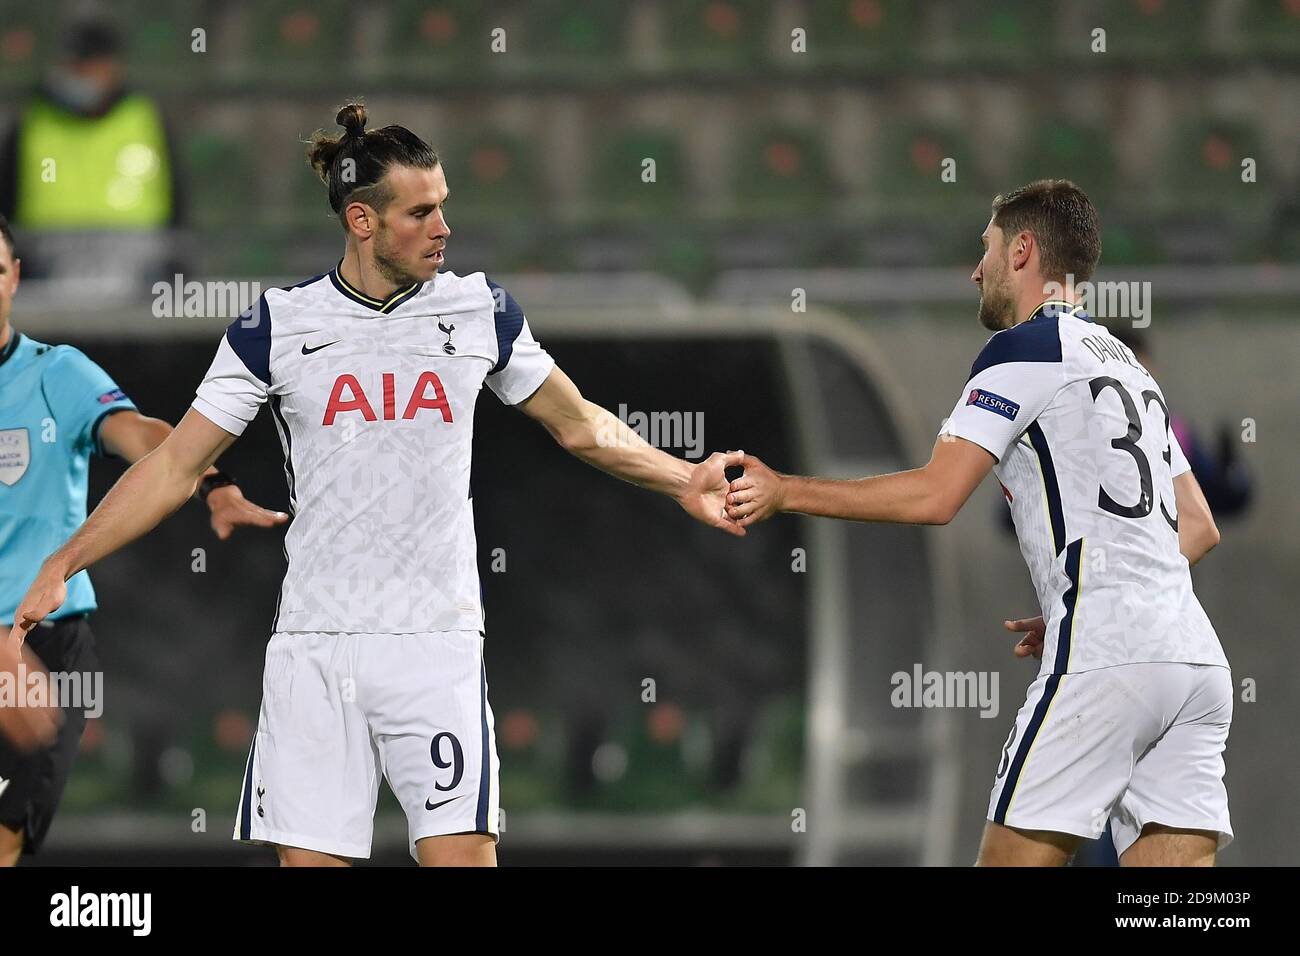 Tottenham Hotspur vs. Ludogorets Razgrad 2020: Europa League match